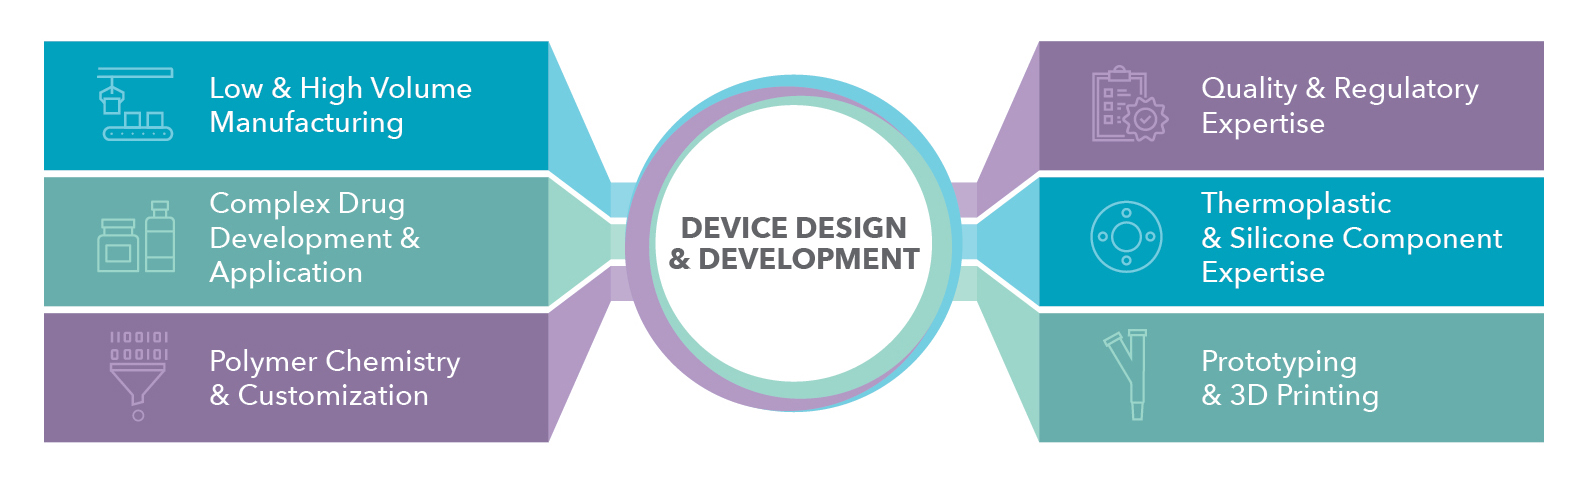 Device design and development process